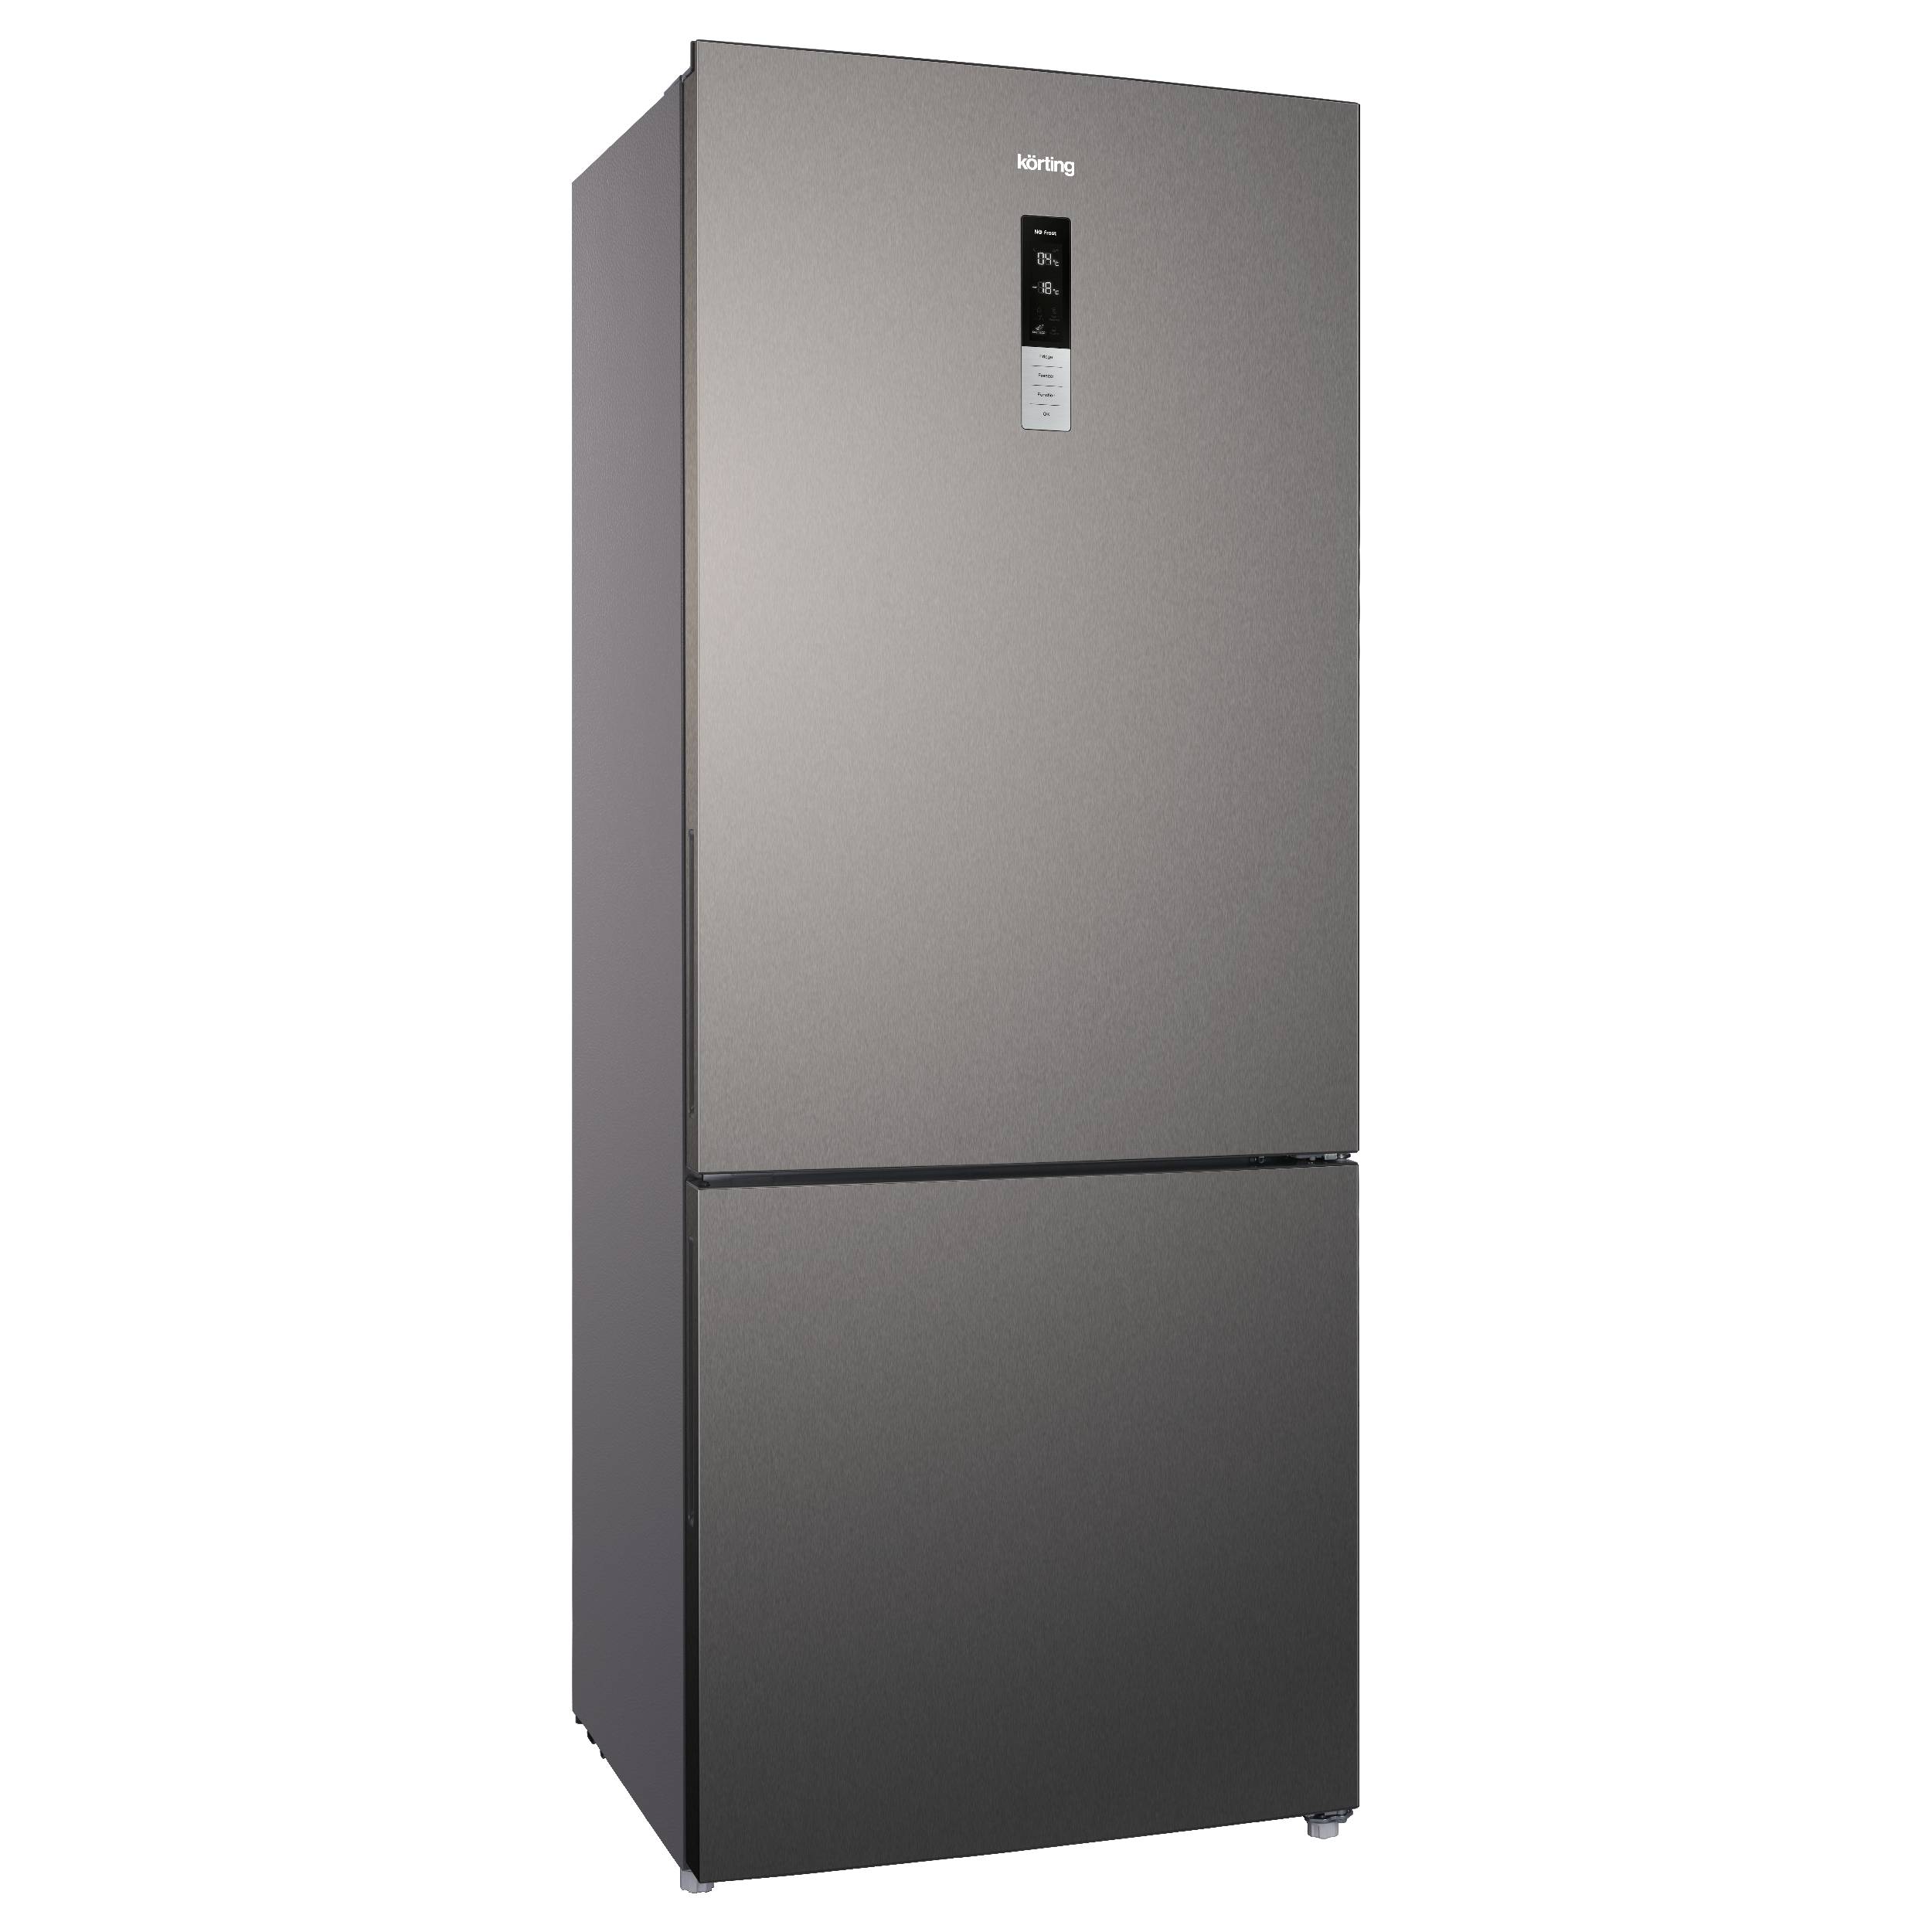 Холодильник Korting KNFC 72337 X серебристый, серый холодильник korting knfc 71863 b